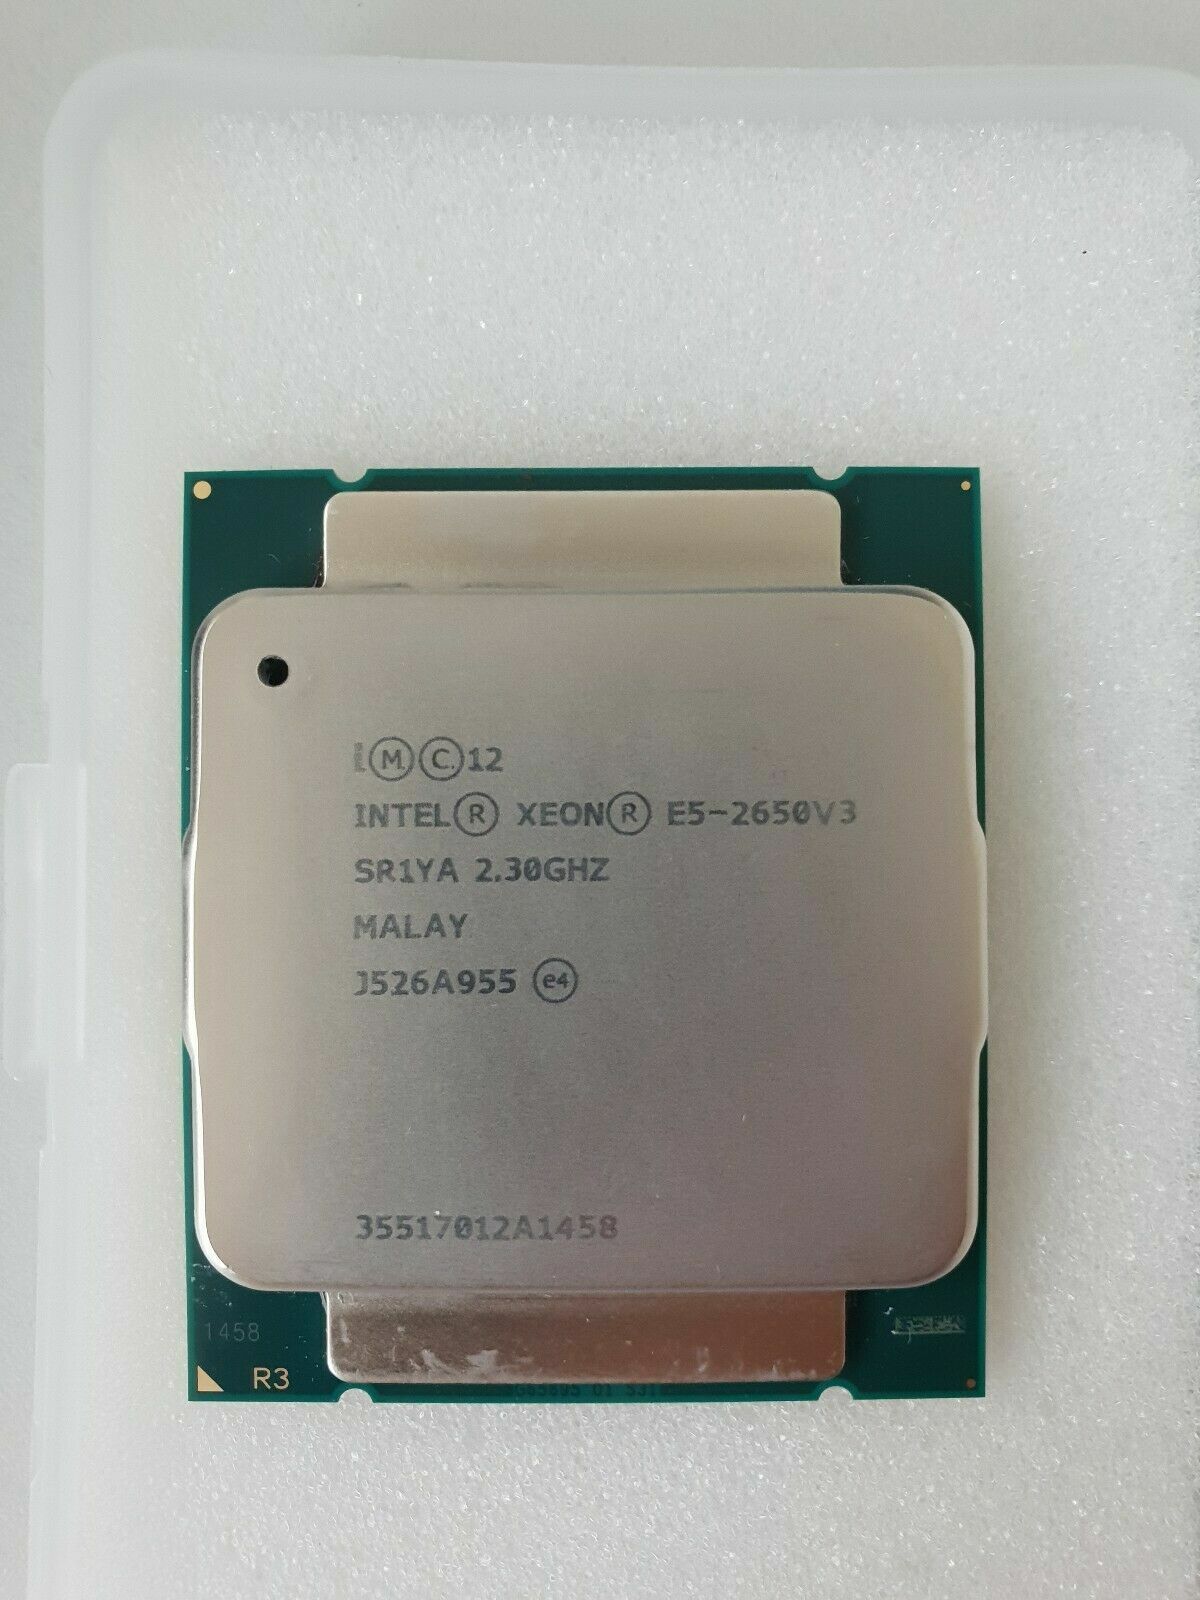 Intel Xeon E5-2650 V3 CPU Processor 10-Core 2.3GHz SR1YA 25MB 105W LGA 2011-3 /